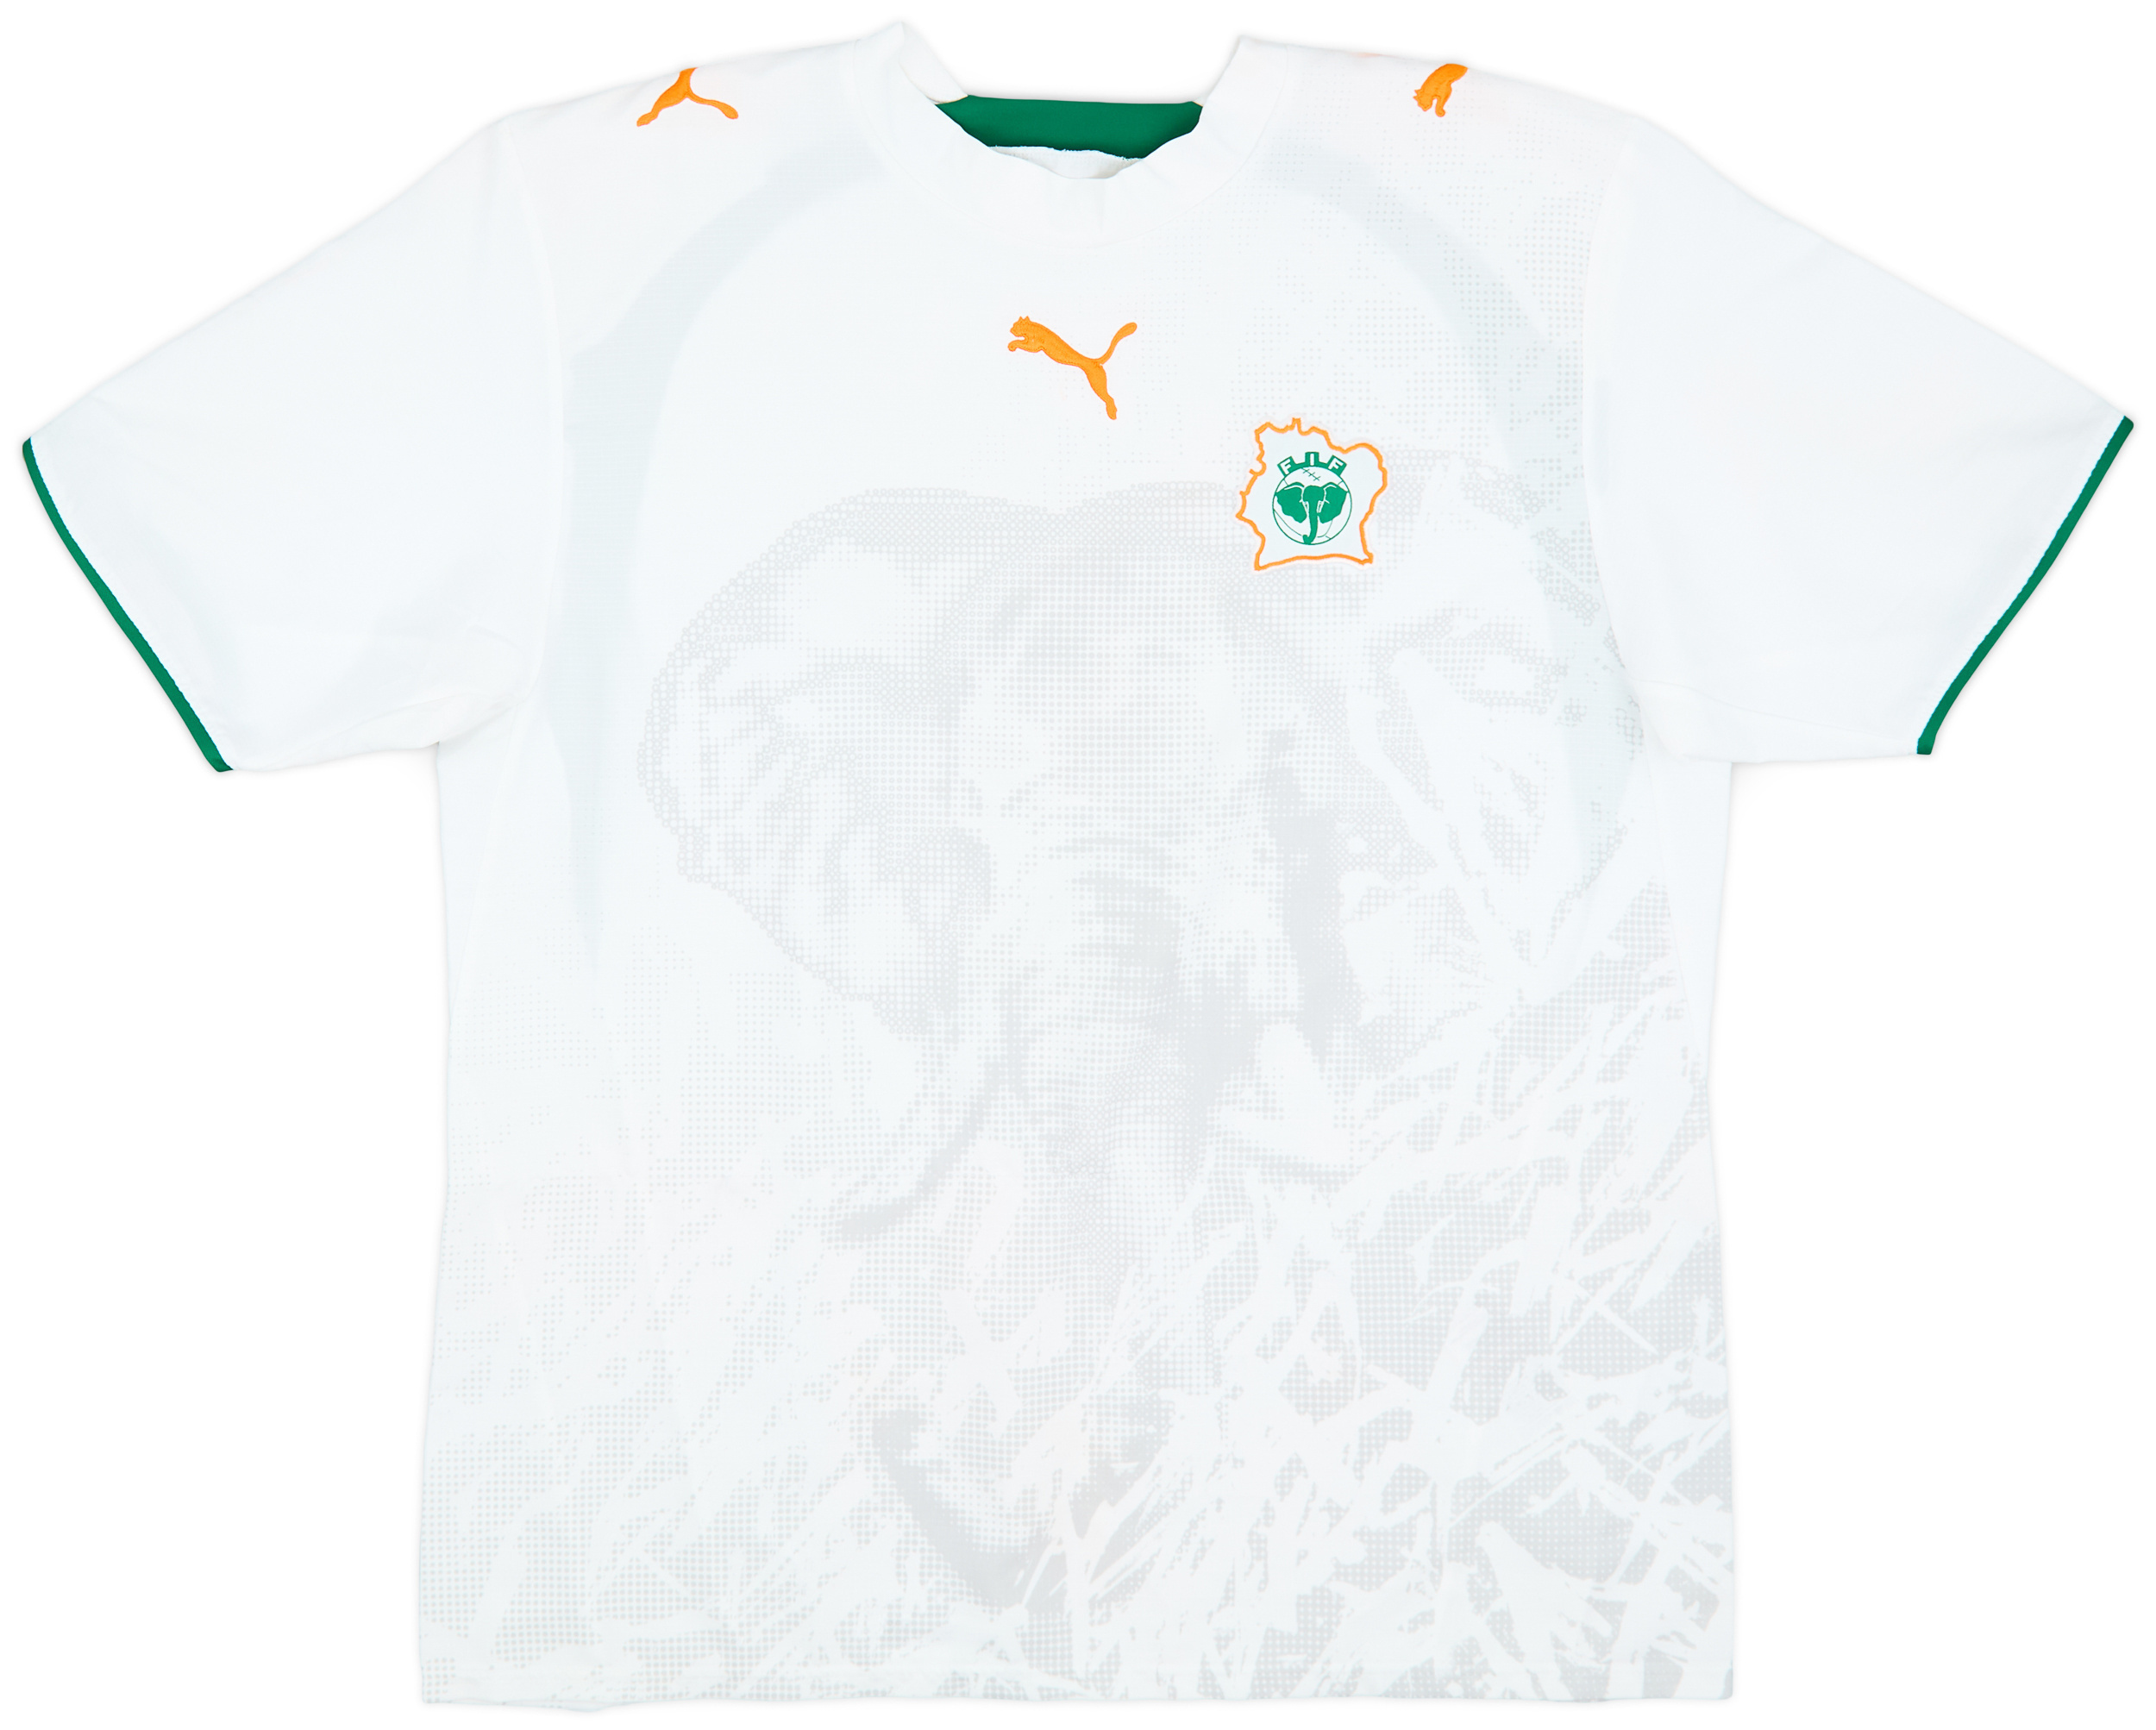 2006-07 Ivory Coast Away Shirt - 9/10 - ()